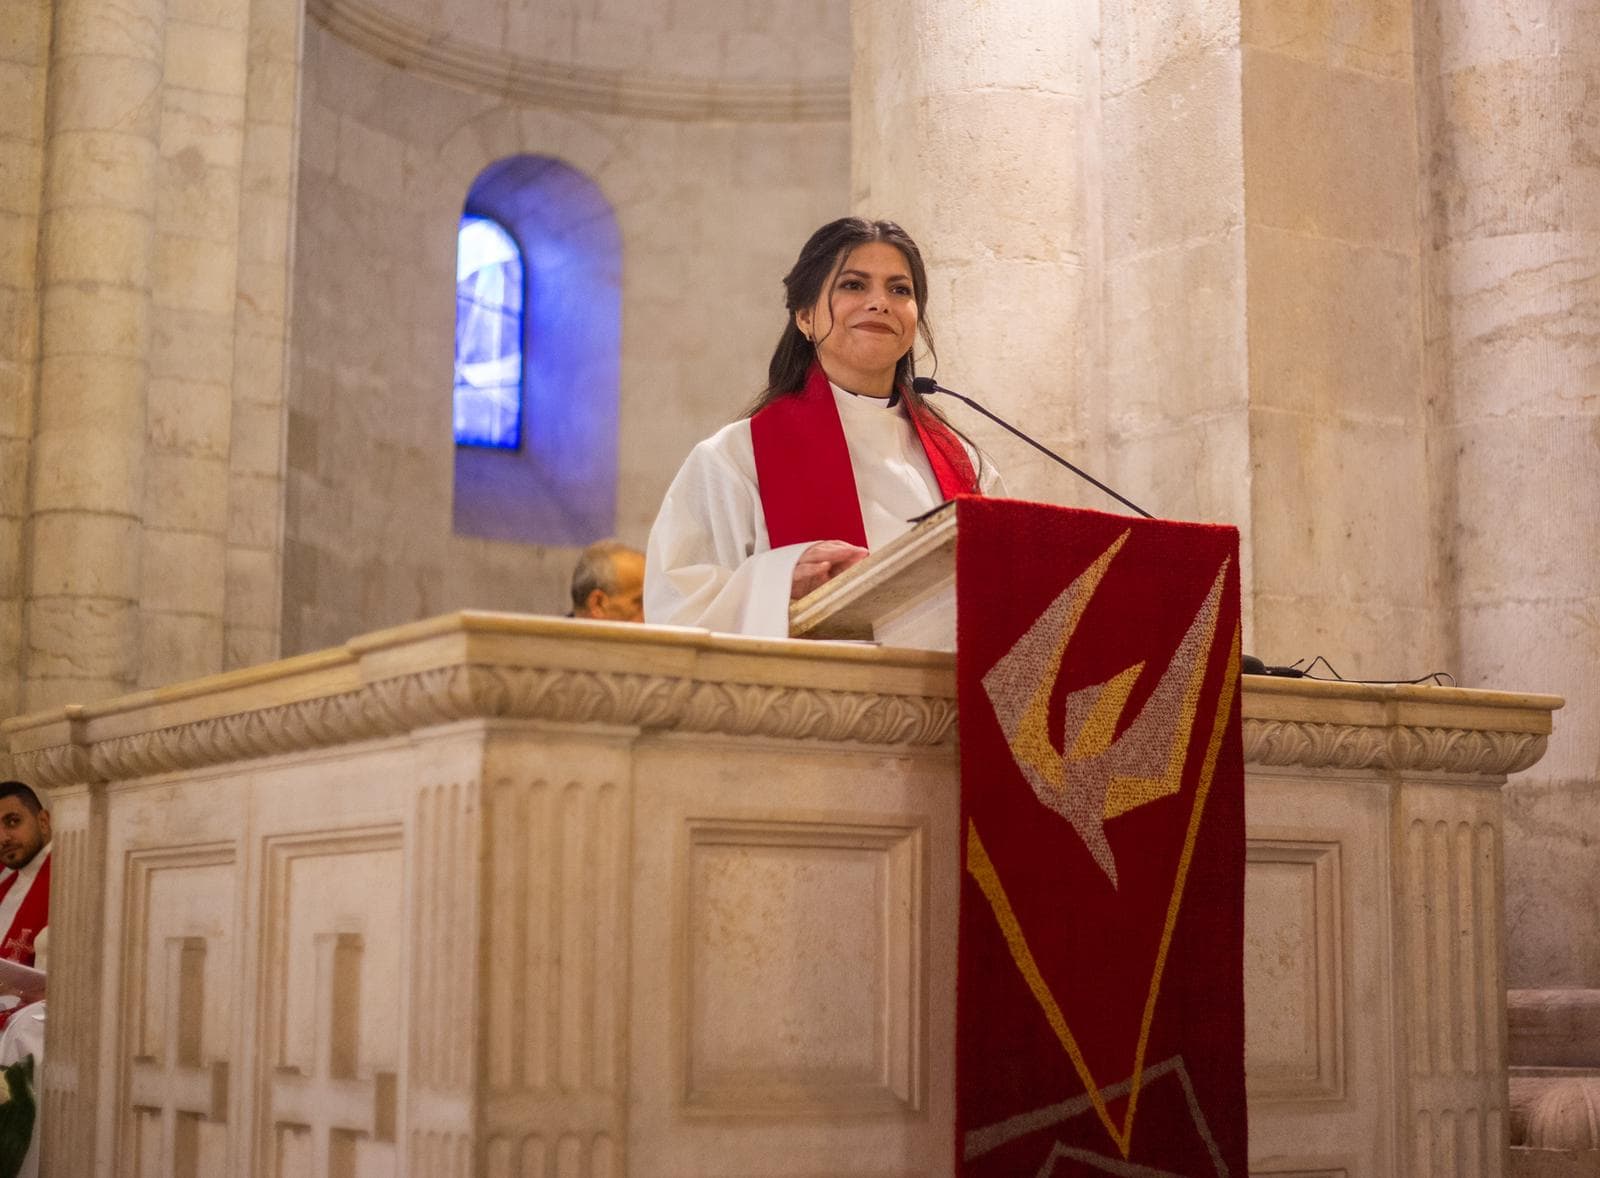 Rev. Sally Azar at the pulpit